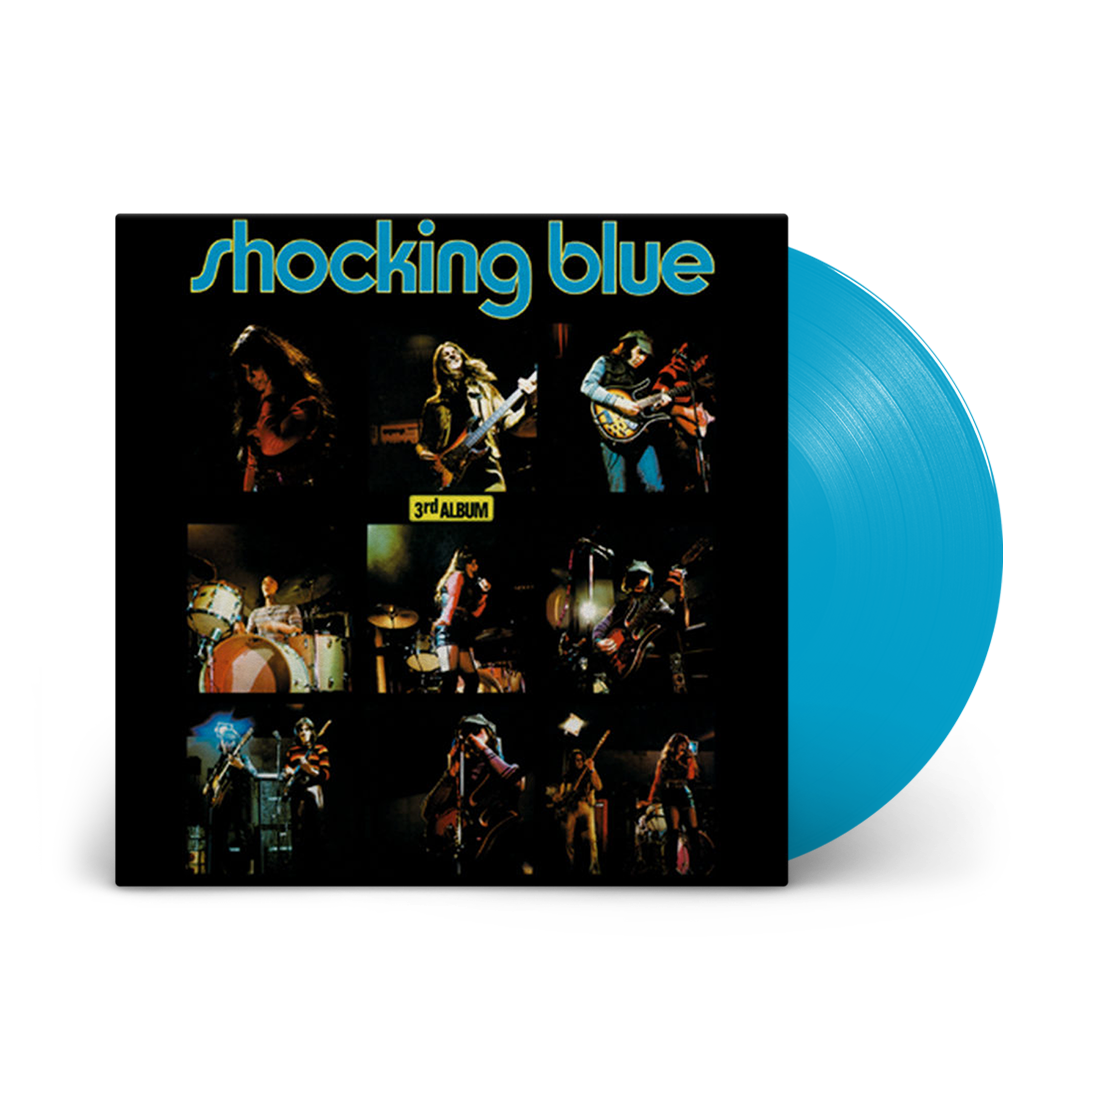 3rd Album: Limited Edition Turquoise Vinyl LP